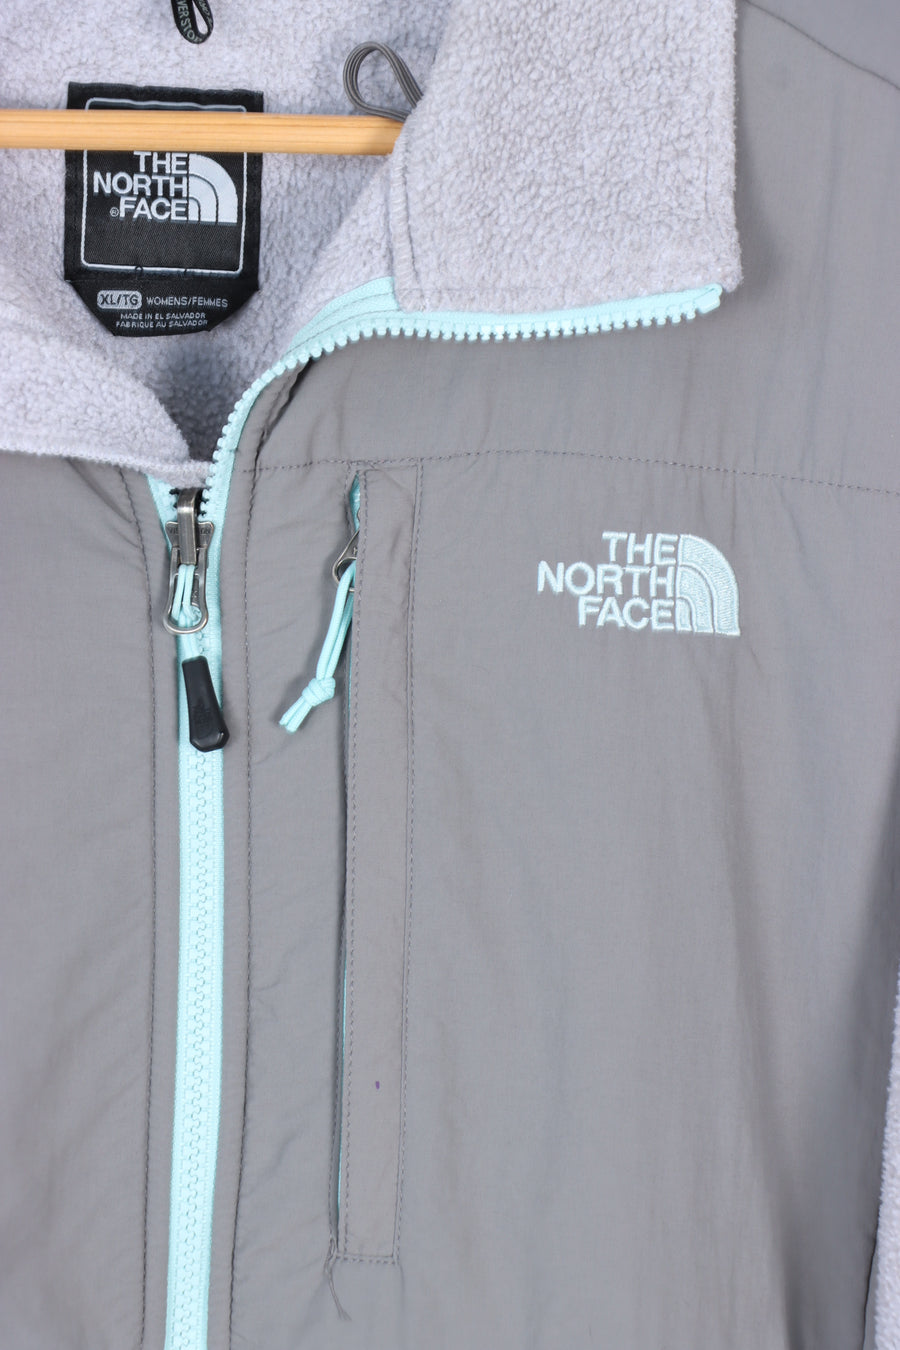 THE NORTH FACE Grey & Teal Panel Fleece Jacket (Women's XL)